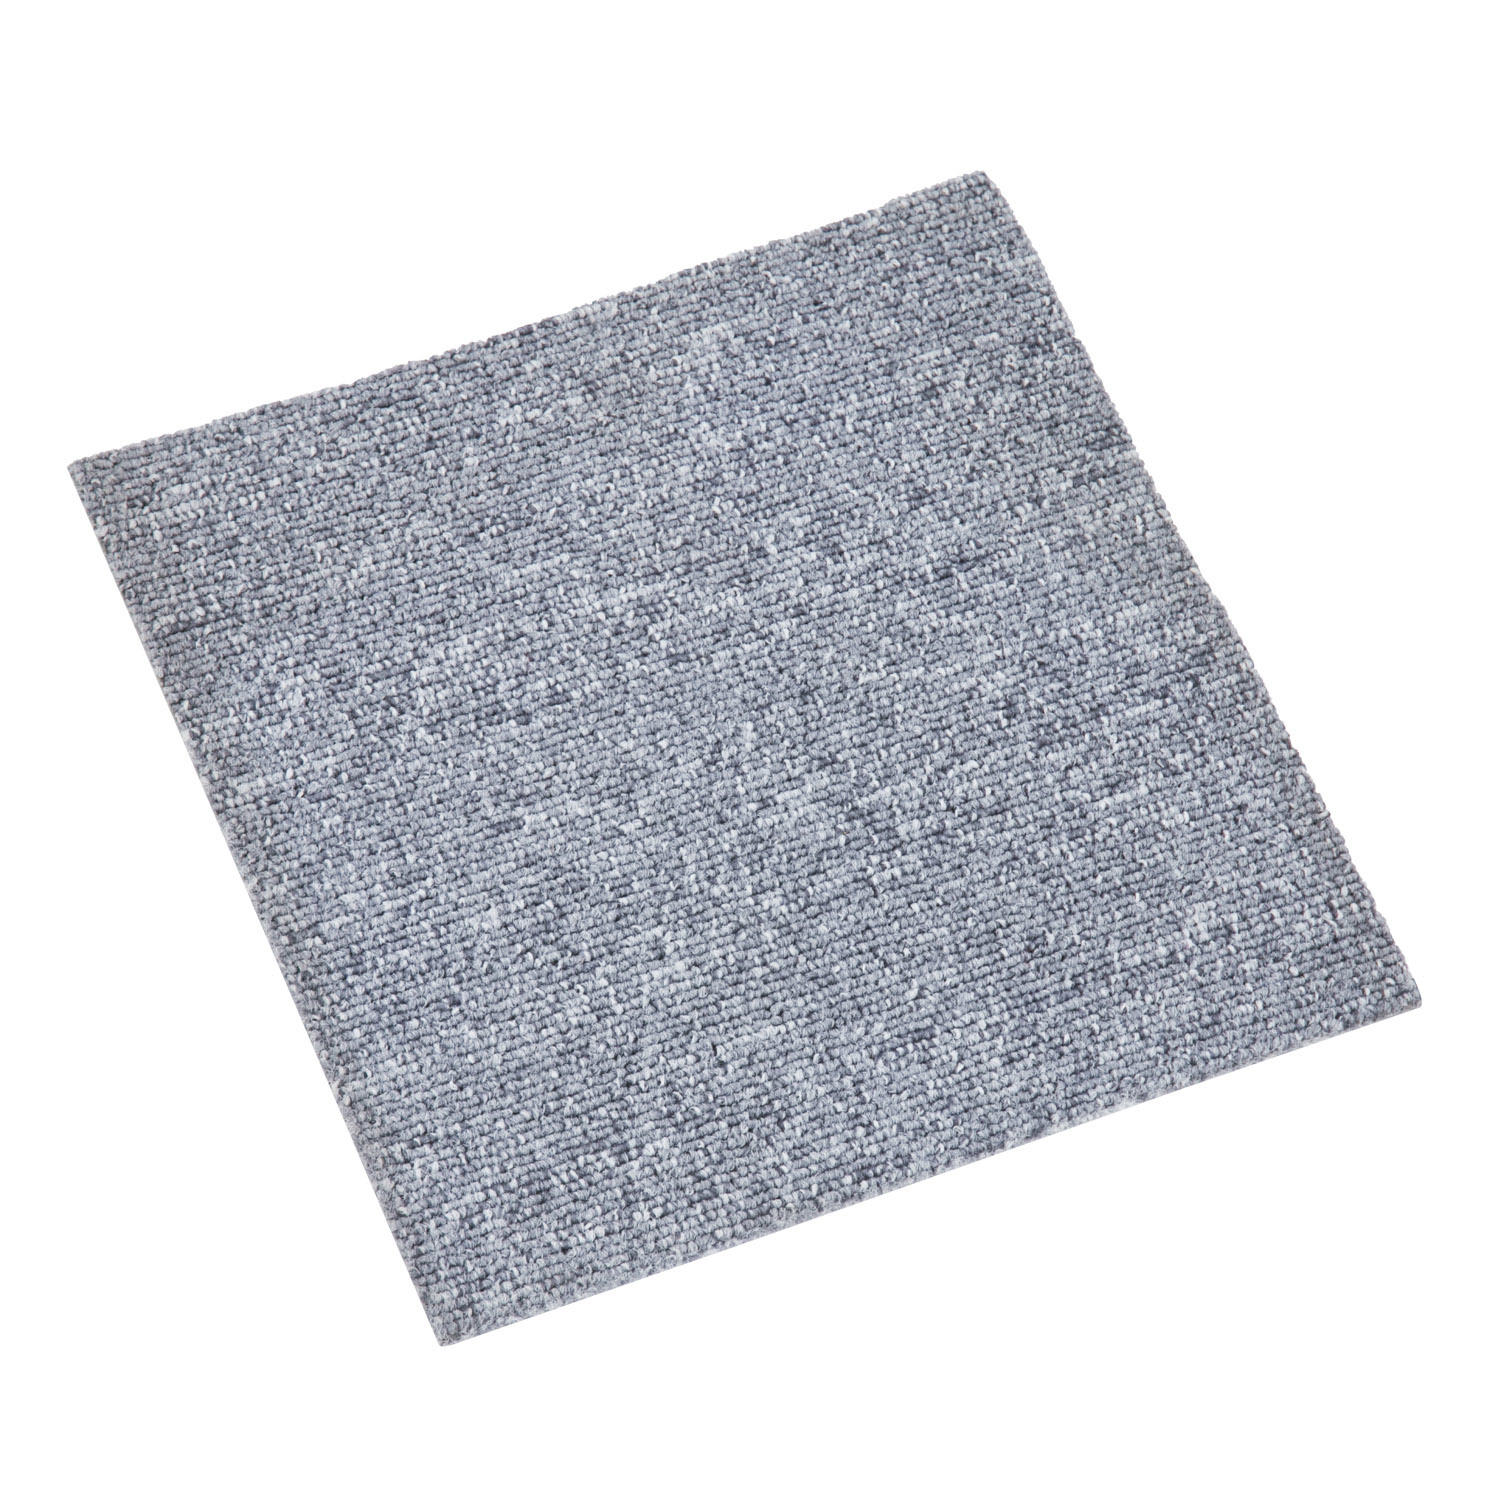 Outdoor Waterproof Quality Carpet Tiles